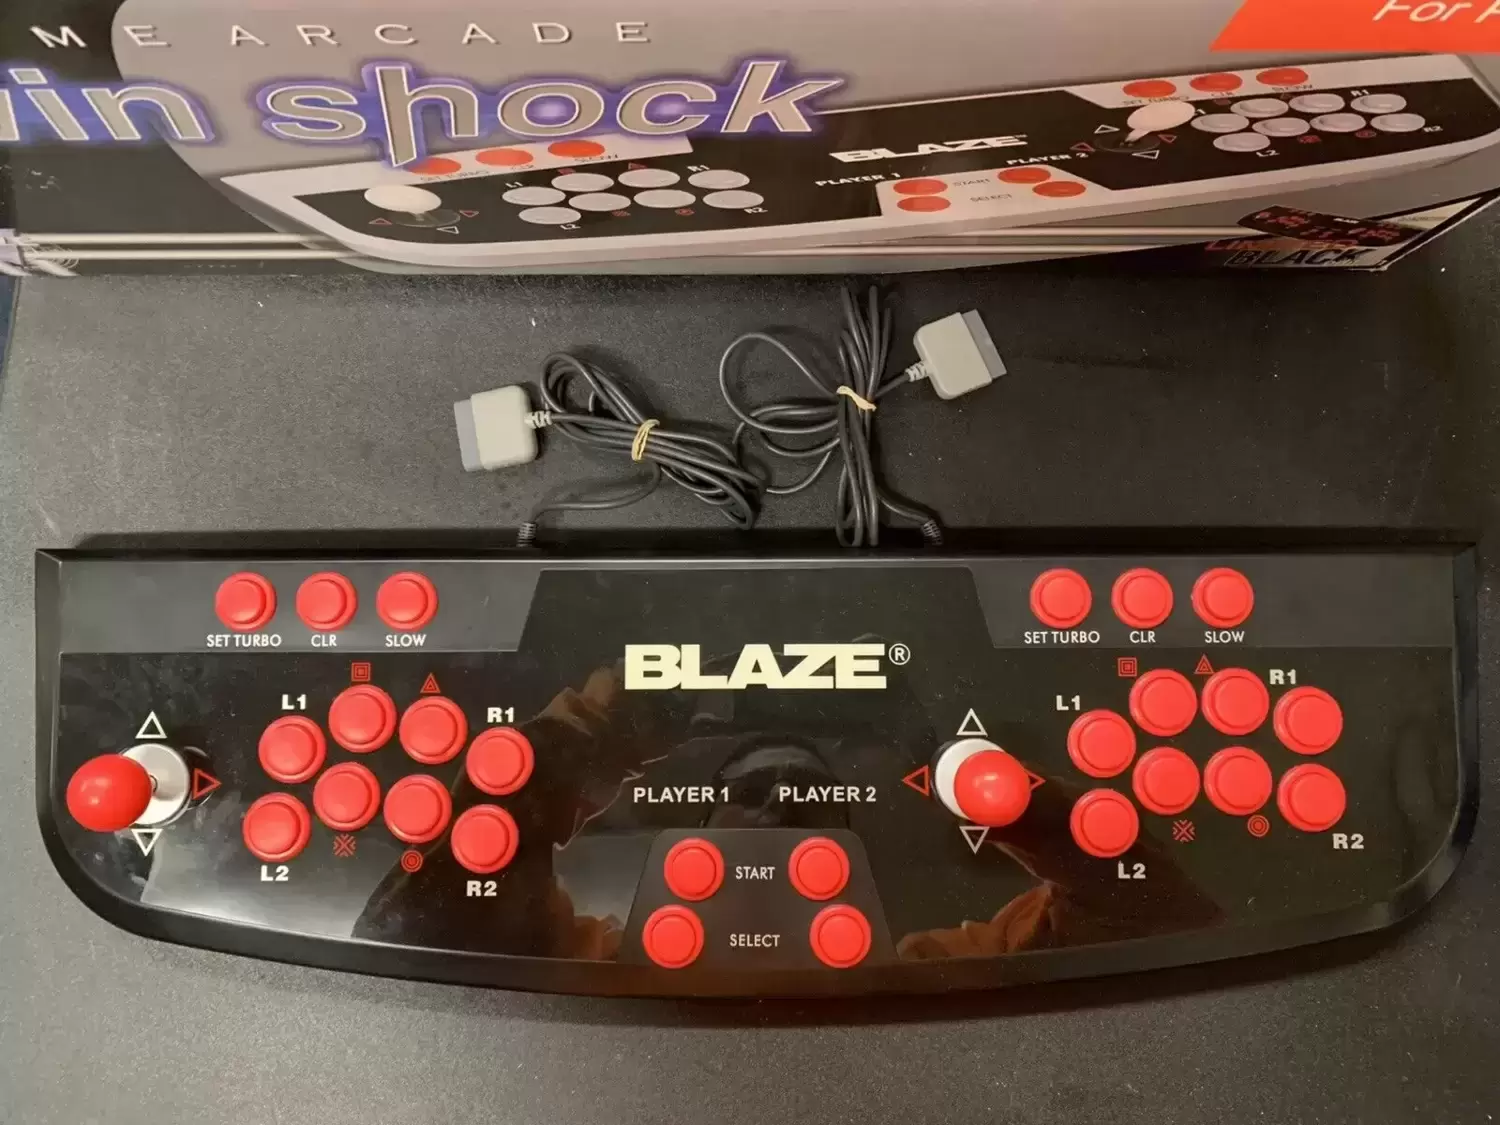 Arcade Stick - BLAZE Home Arcade Twin Shock - Limited Black Edition